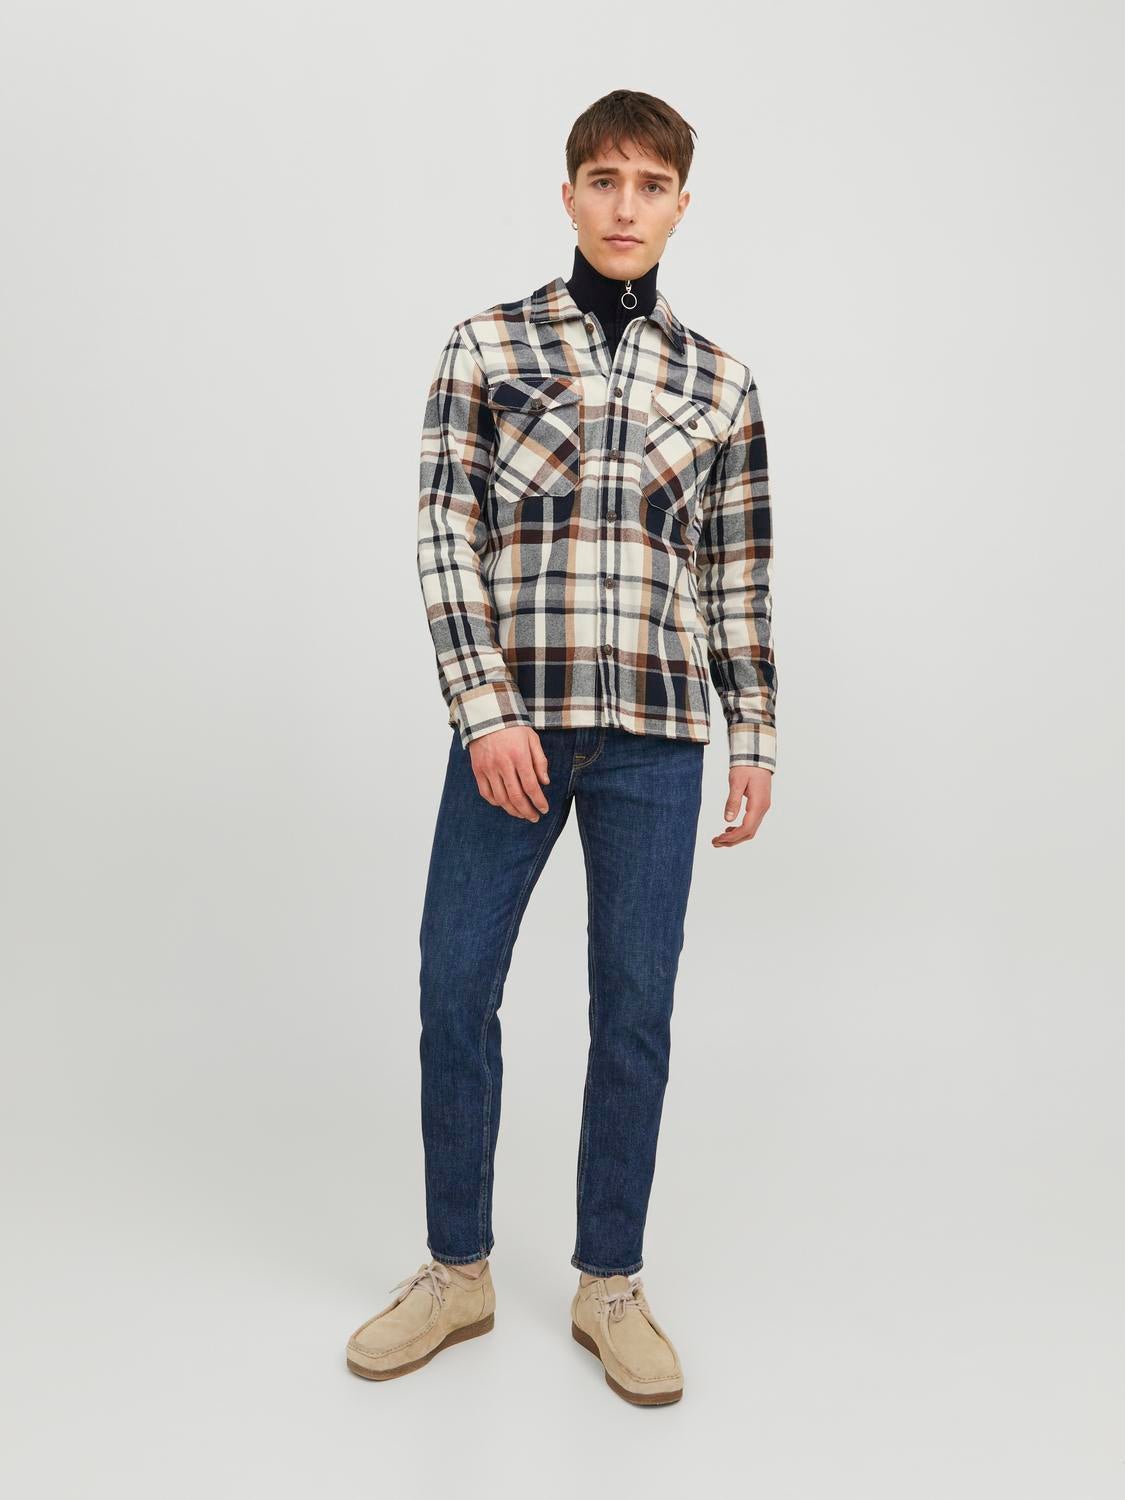 Carolines Mode | StockholmStreetStyle | Mens fashion jeans, Denim jacket  fashion, Denim jacket men